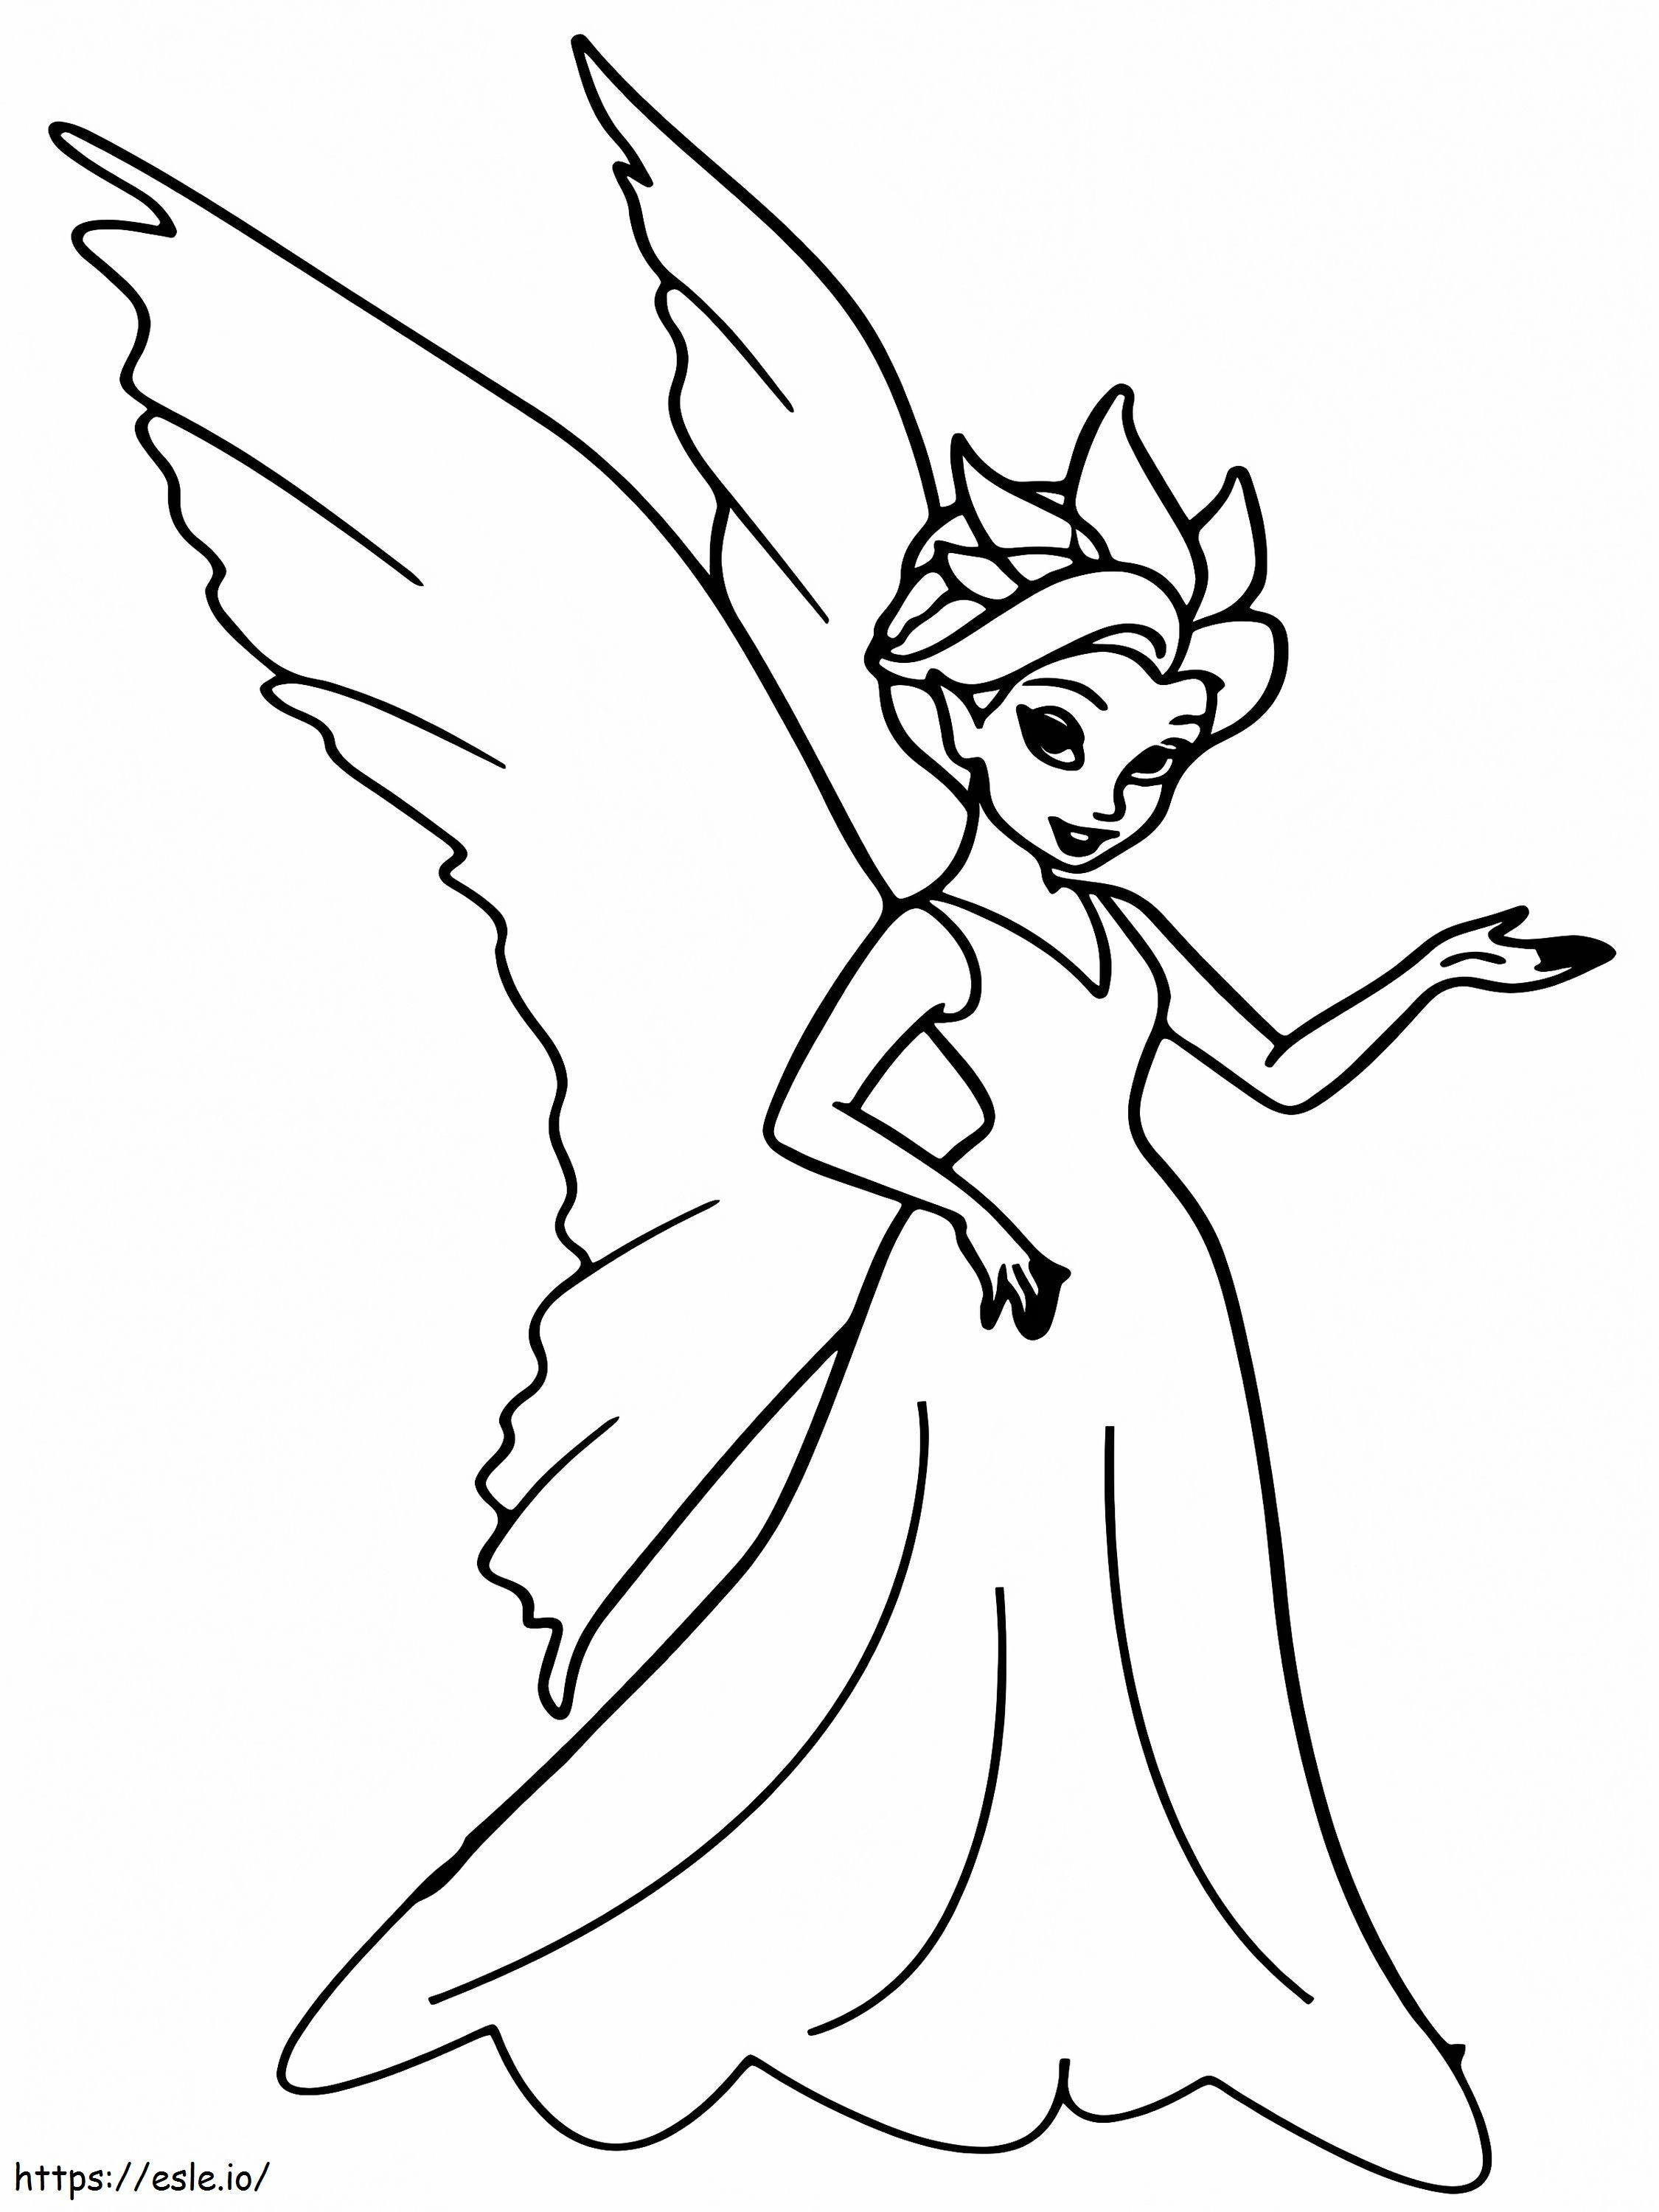 Princesa Fada Virtuosa para colorir